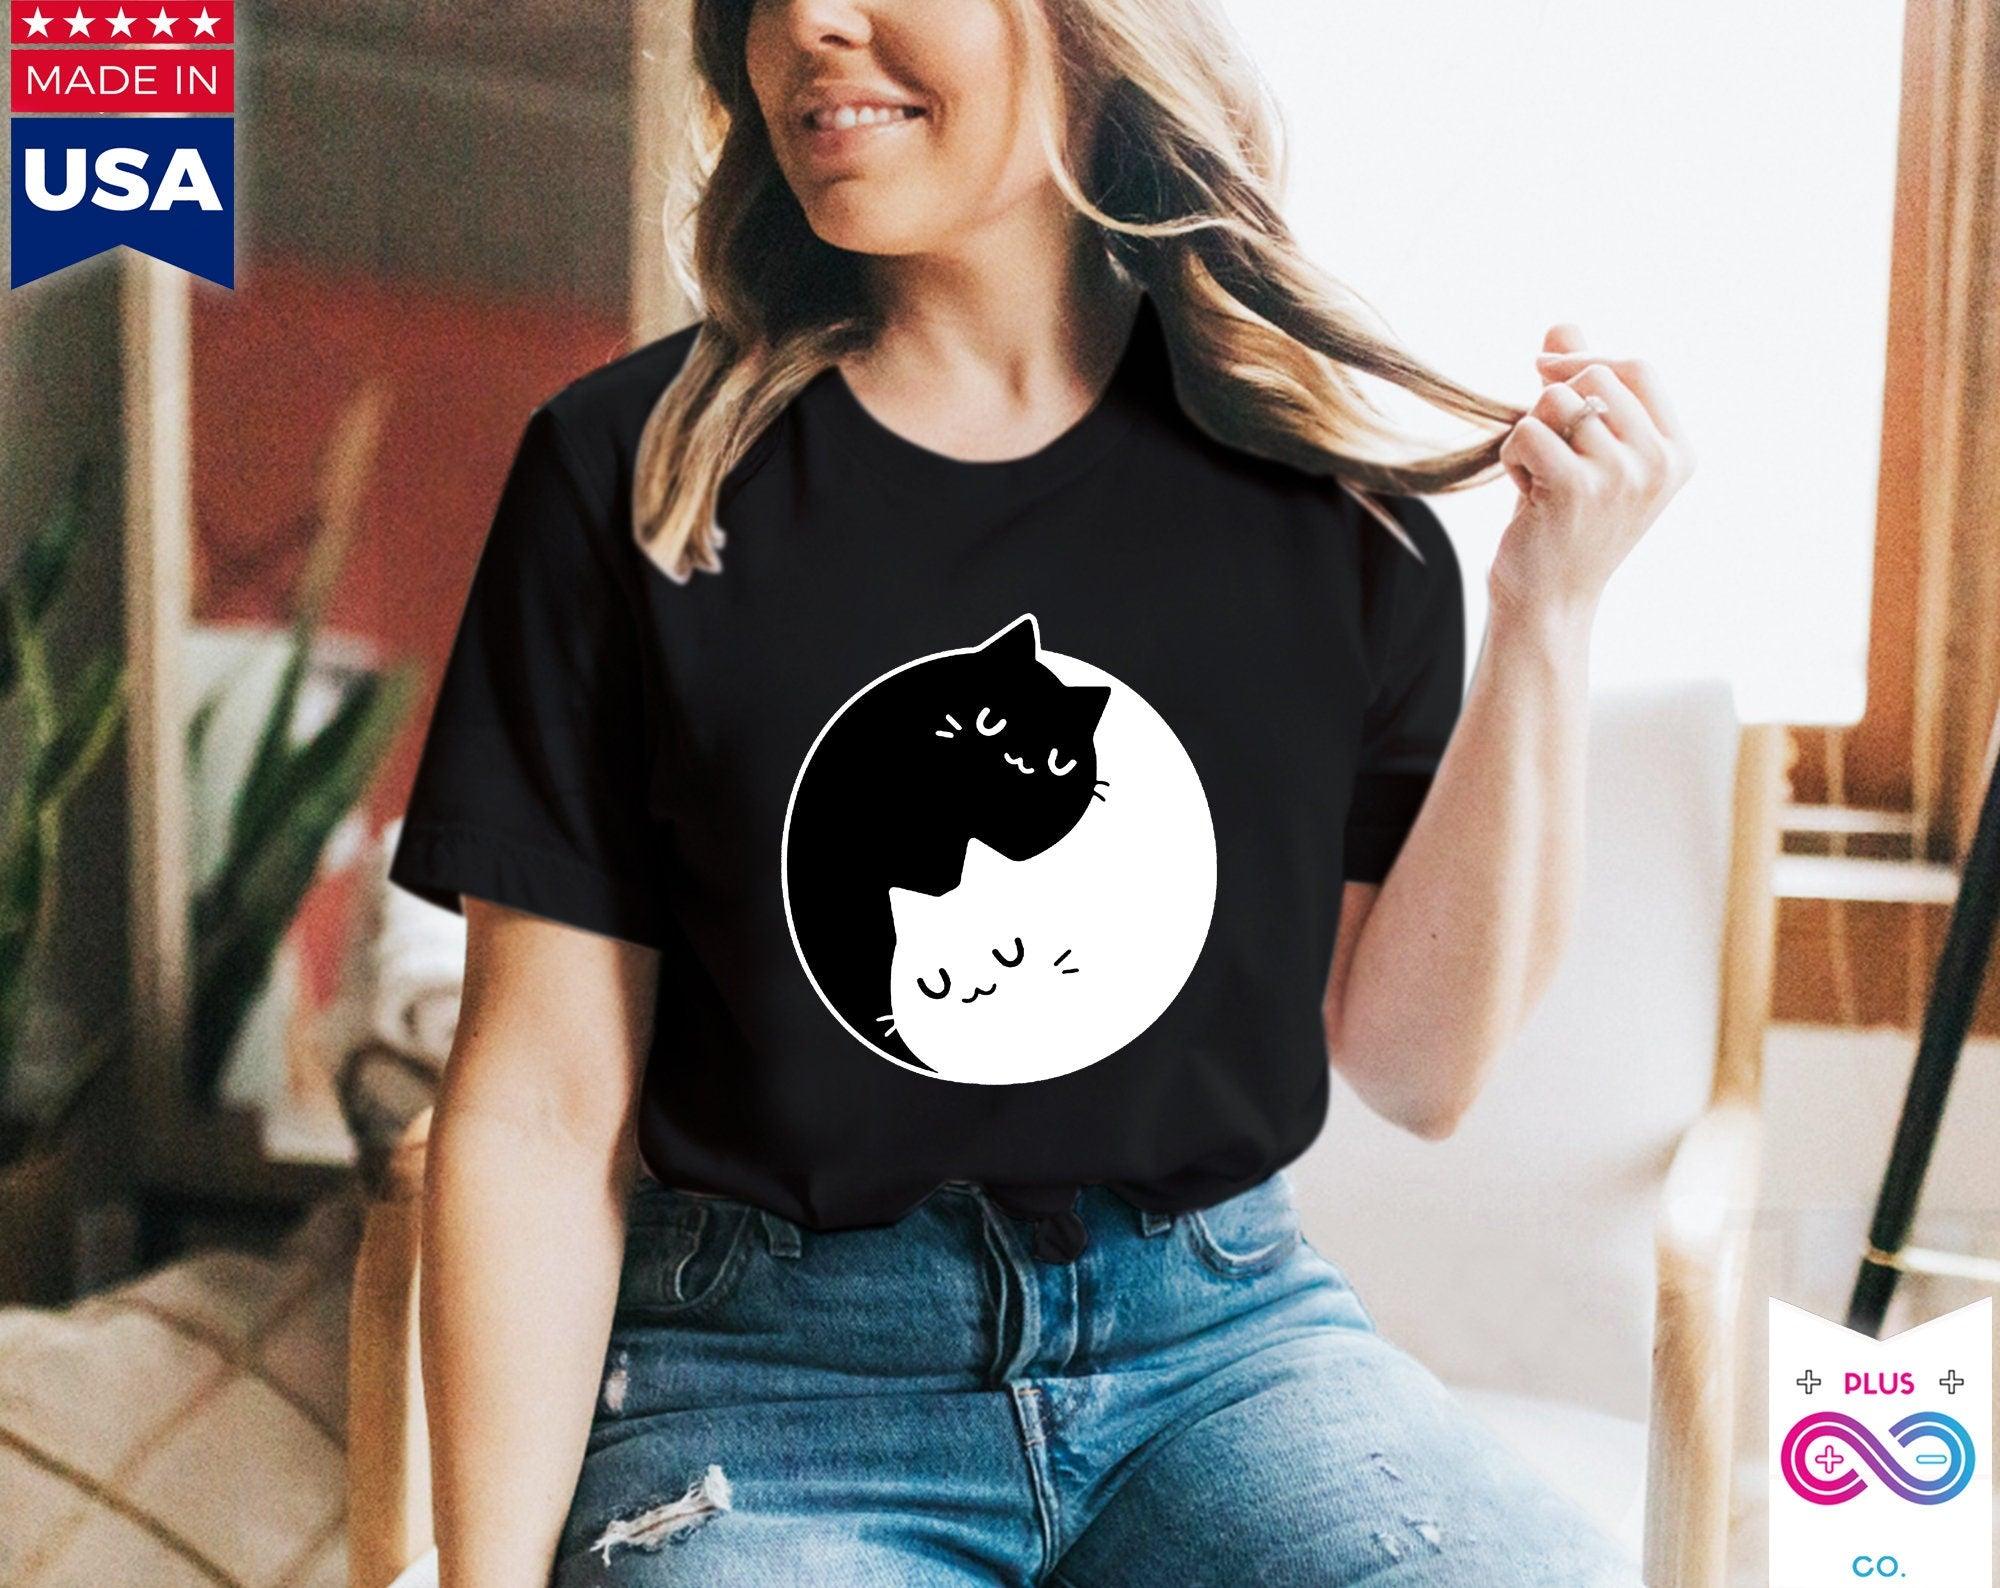 Camisetas de gatos Yin Yang, Dualidad Yin Yang || Gatos Yin Yang || Regalo perfecto - SML Xl - Damas, Hombres Unisex || Ideas de regalos para parejas de mejores amigas, mamá gata - plusminusco.com